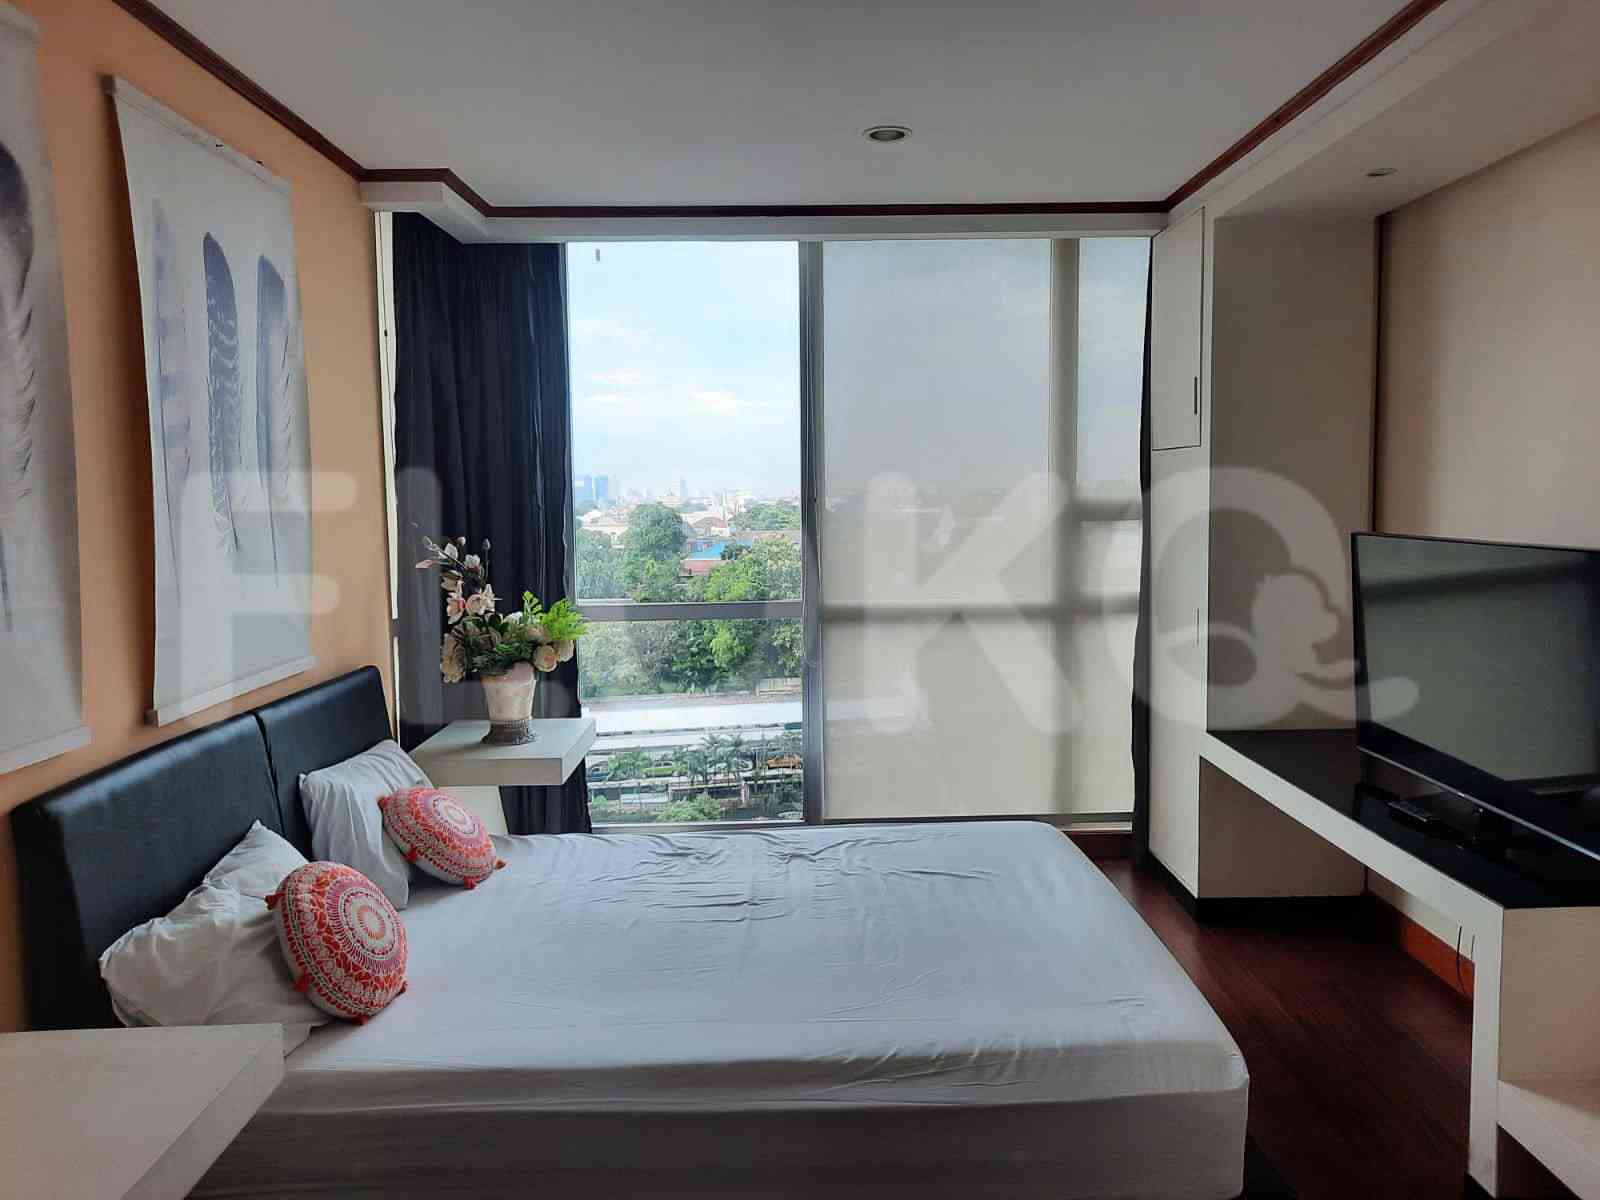 2 Bedroom on 17th Floor for Rent in Kemang Village Residence - fke9f0 1